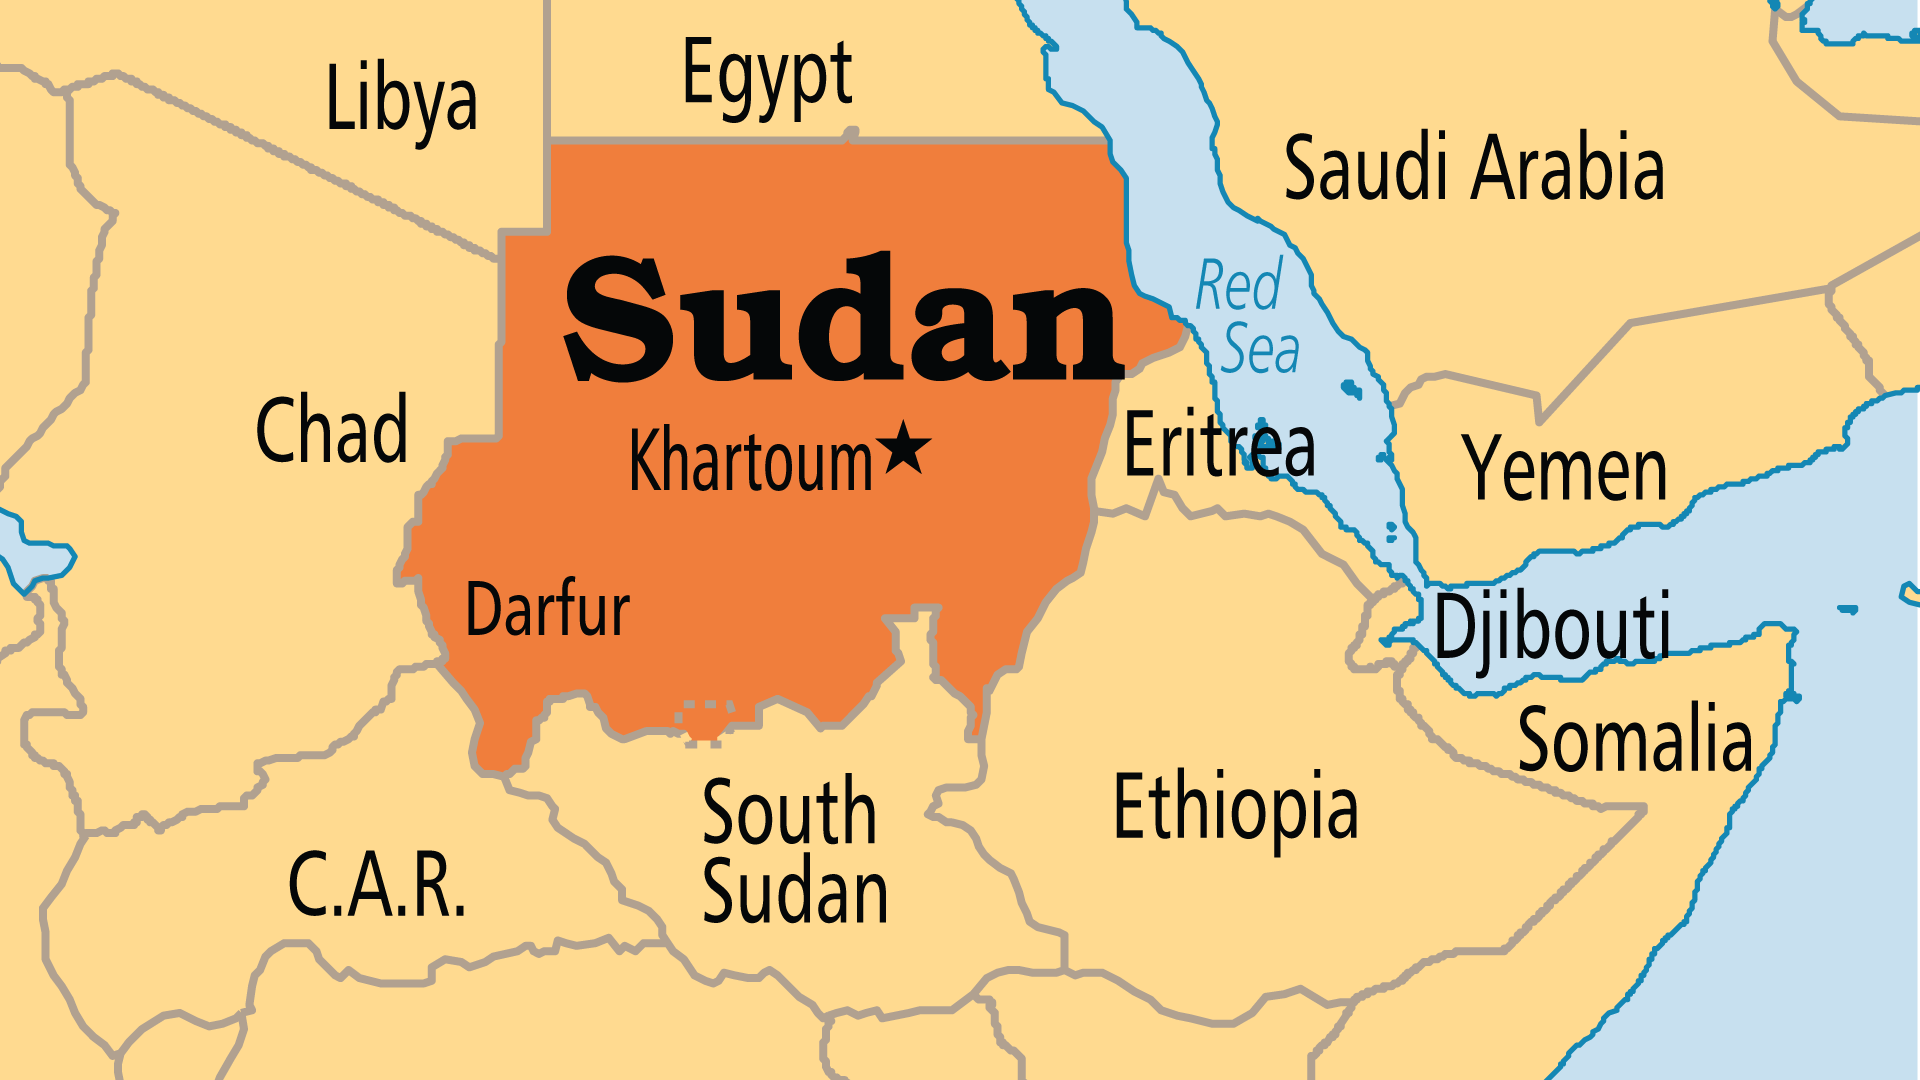 Sudan (Operation World)